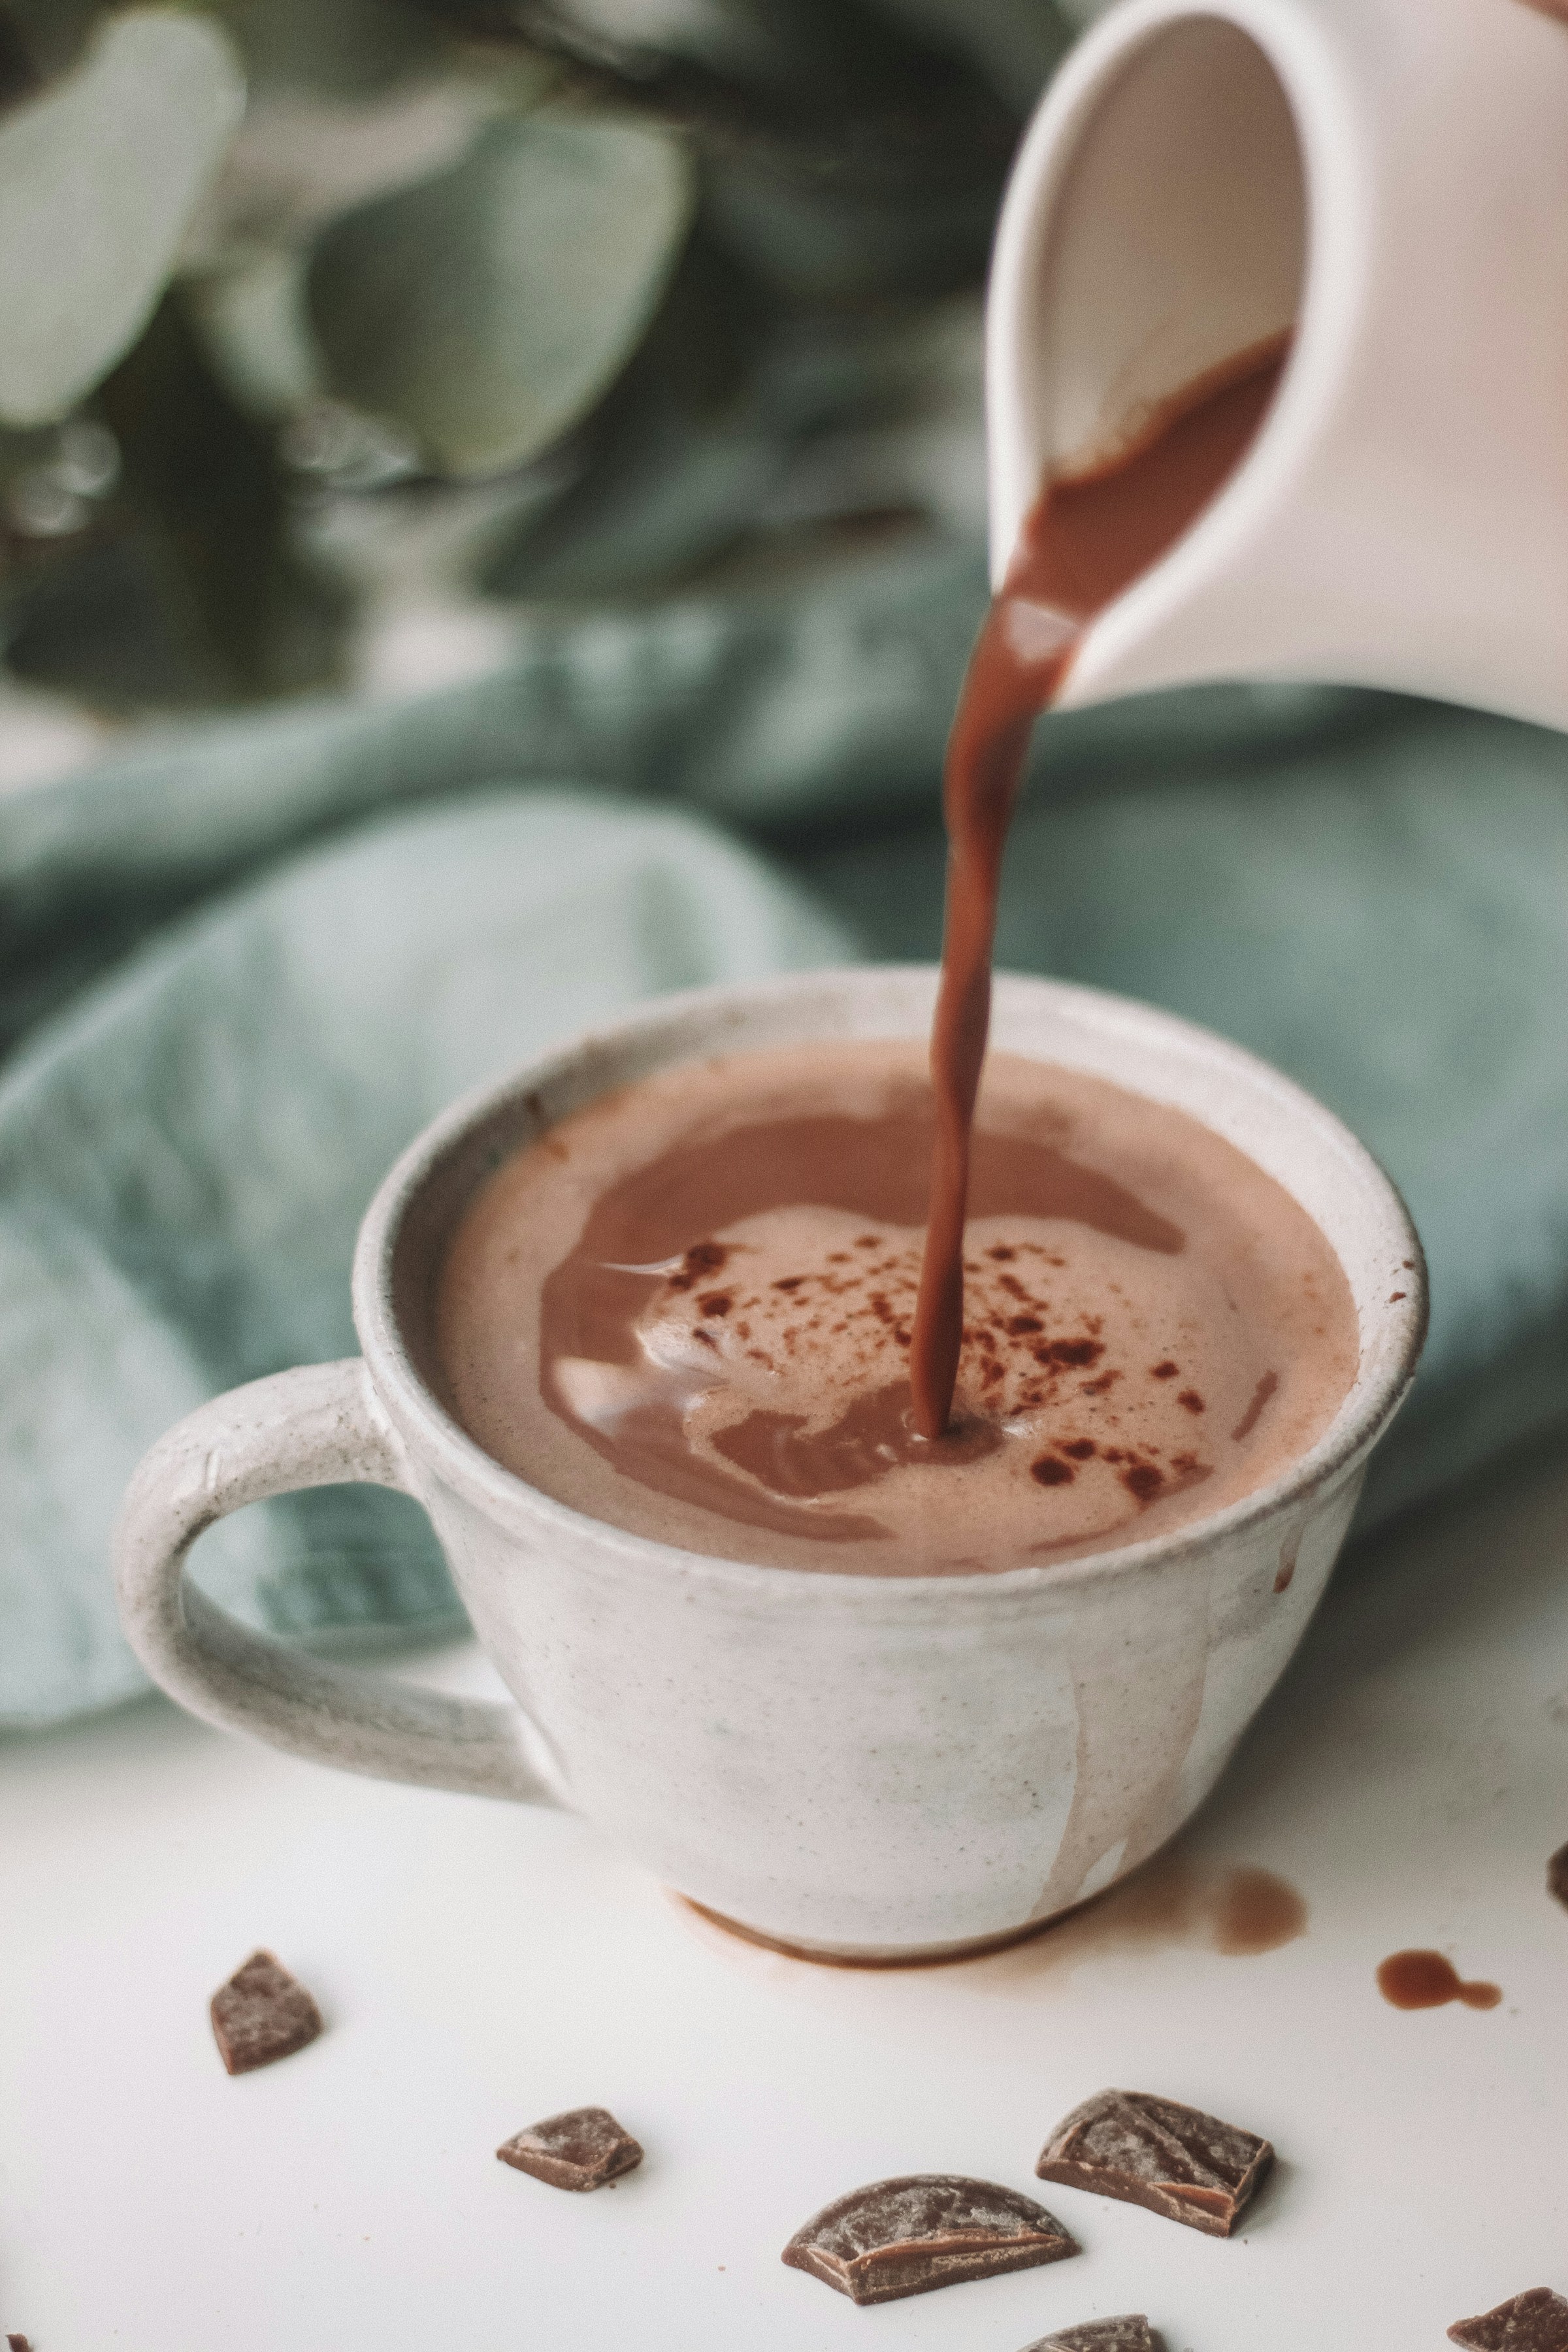 A mug of hot chocolate | Source: Unsplash